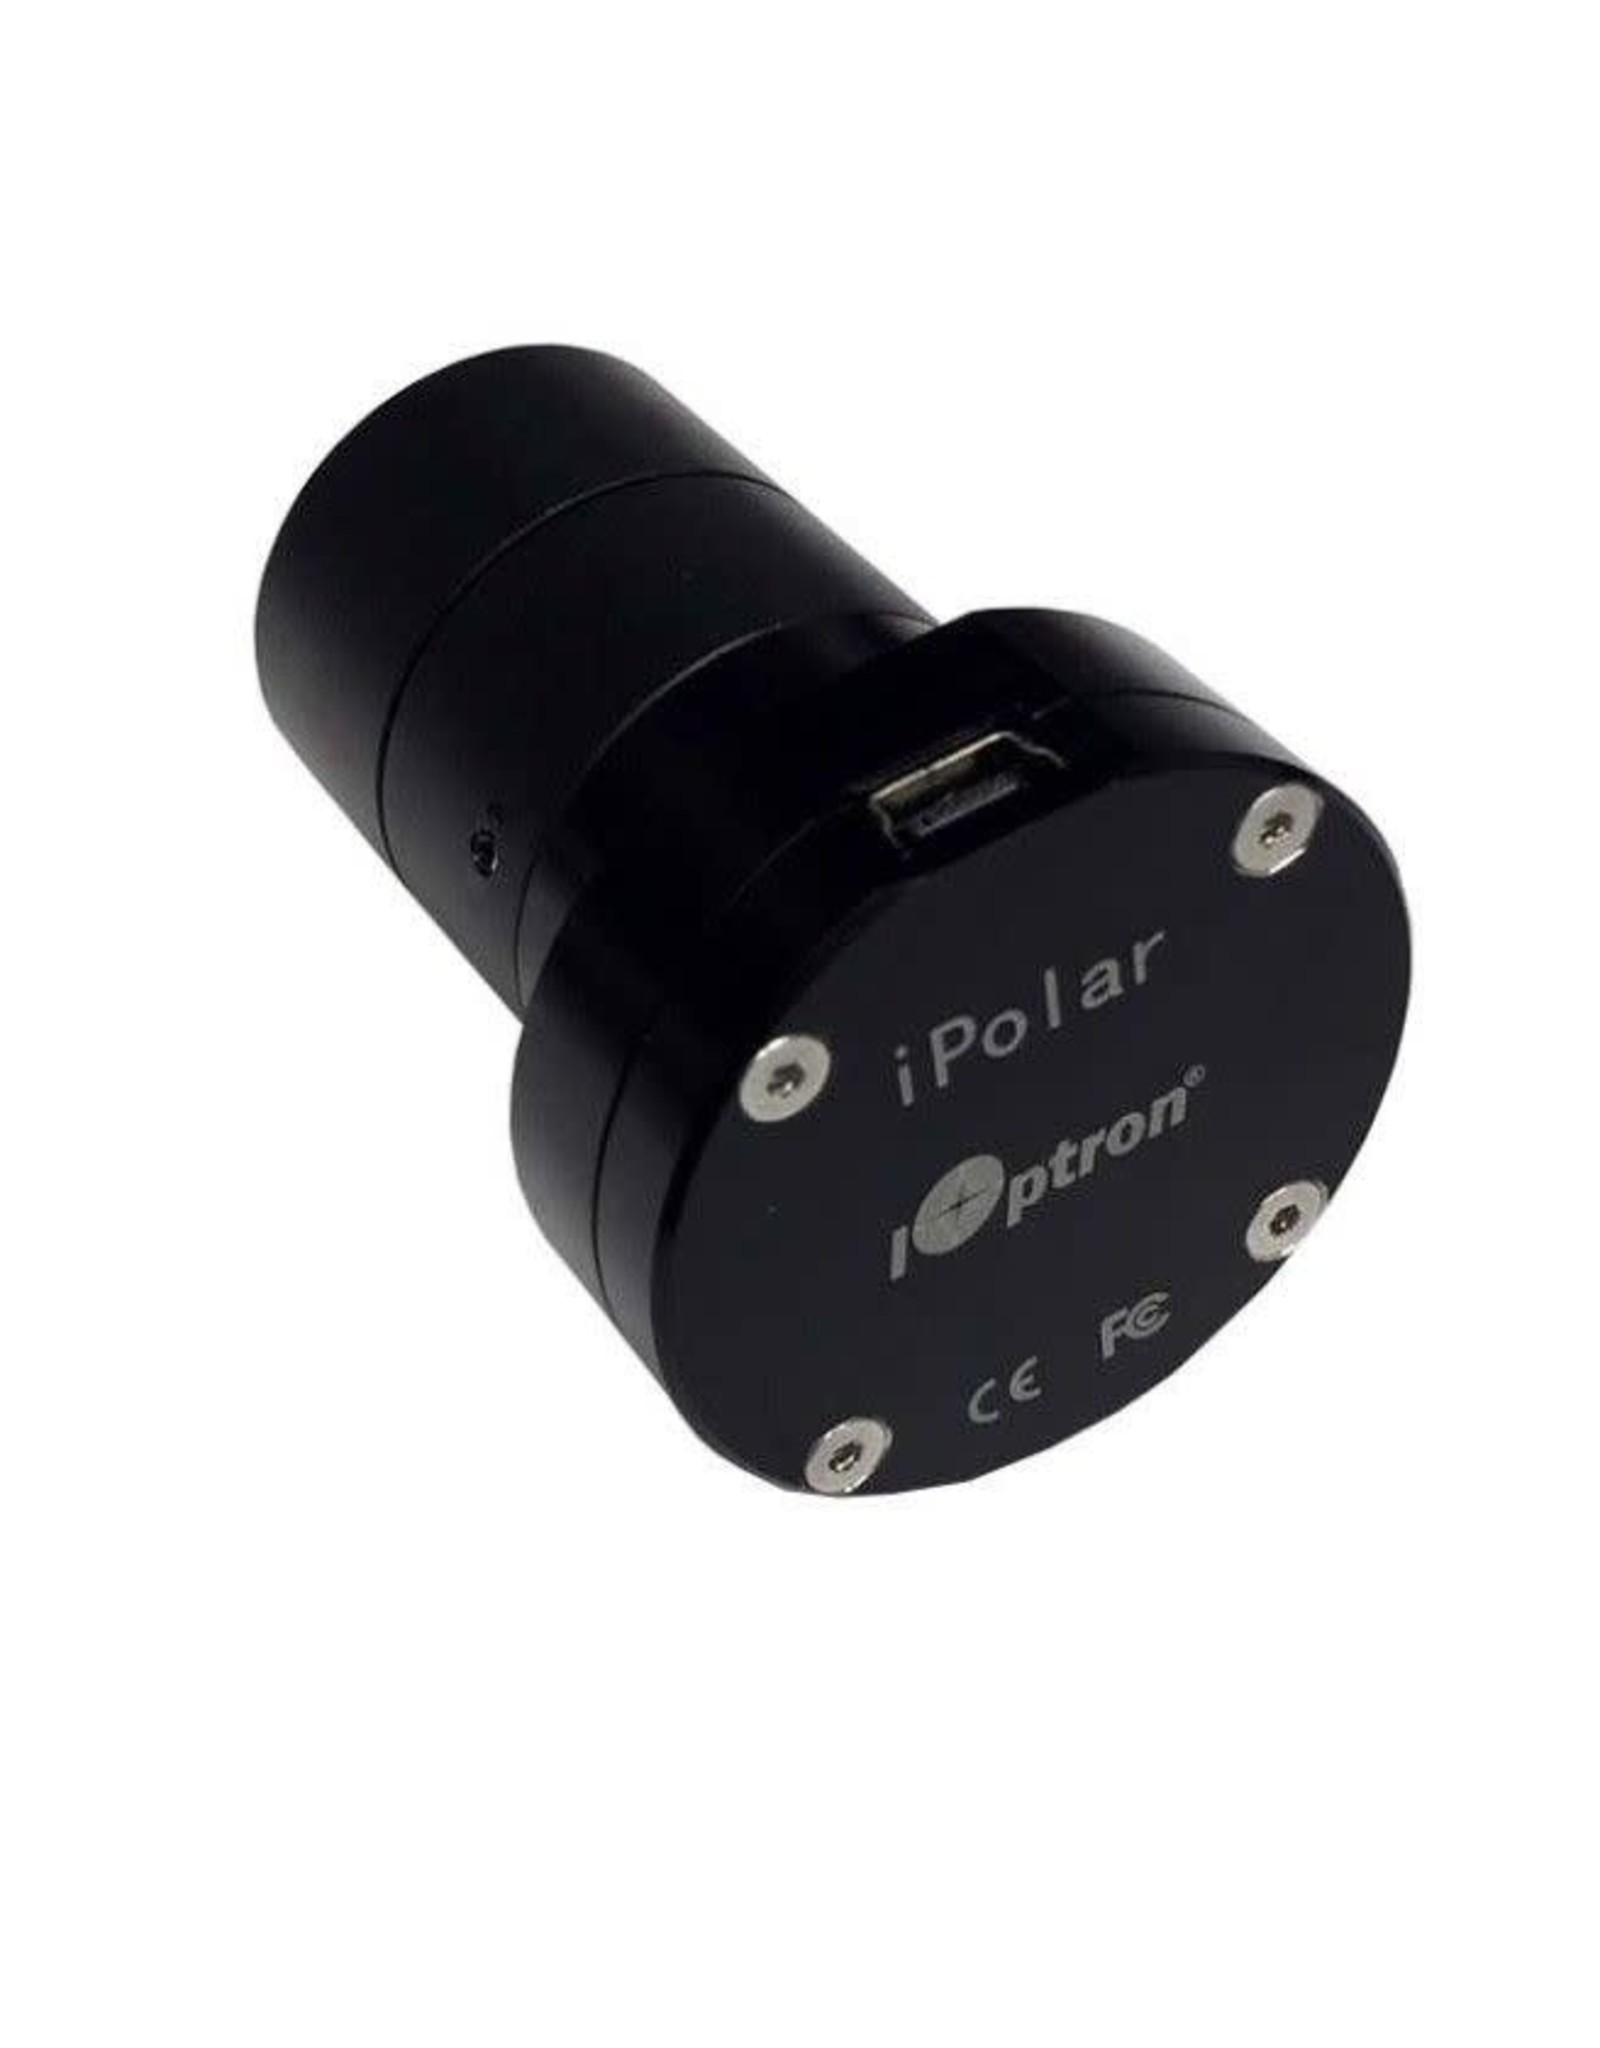 iOptron iOptron iPolarTM Electronics Polarscope with Adapter for External Mounting to iEQ30/45 (#3339-034) External